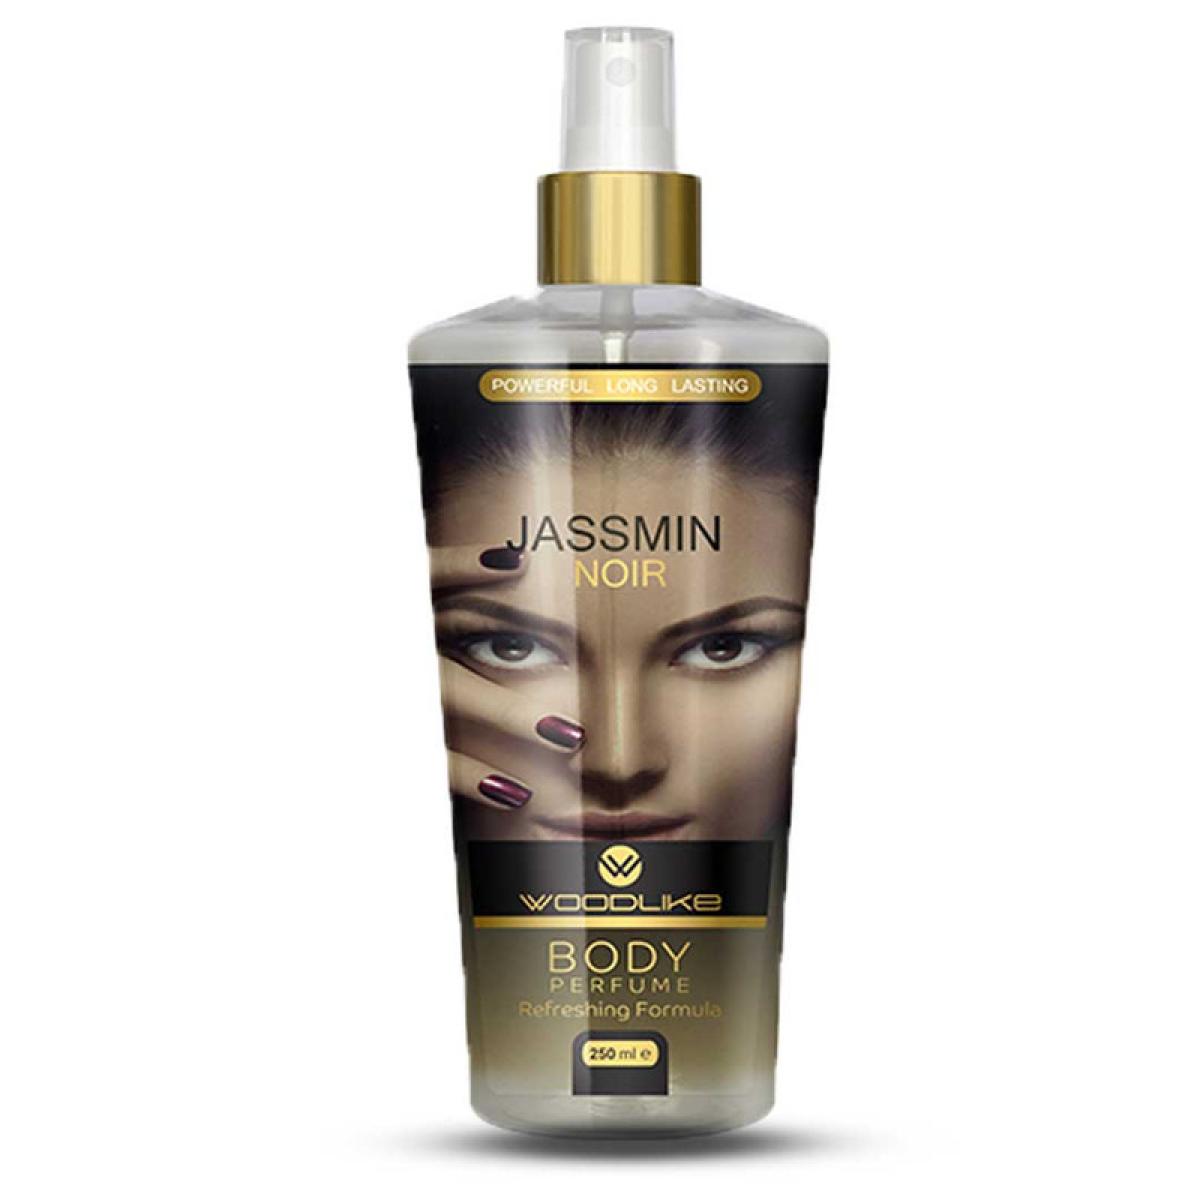 بادی اسپلش زنانه جاسمین نویر - Body Perfume jassmin noir